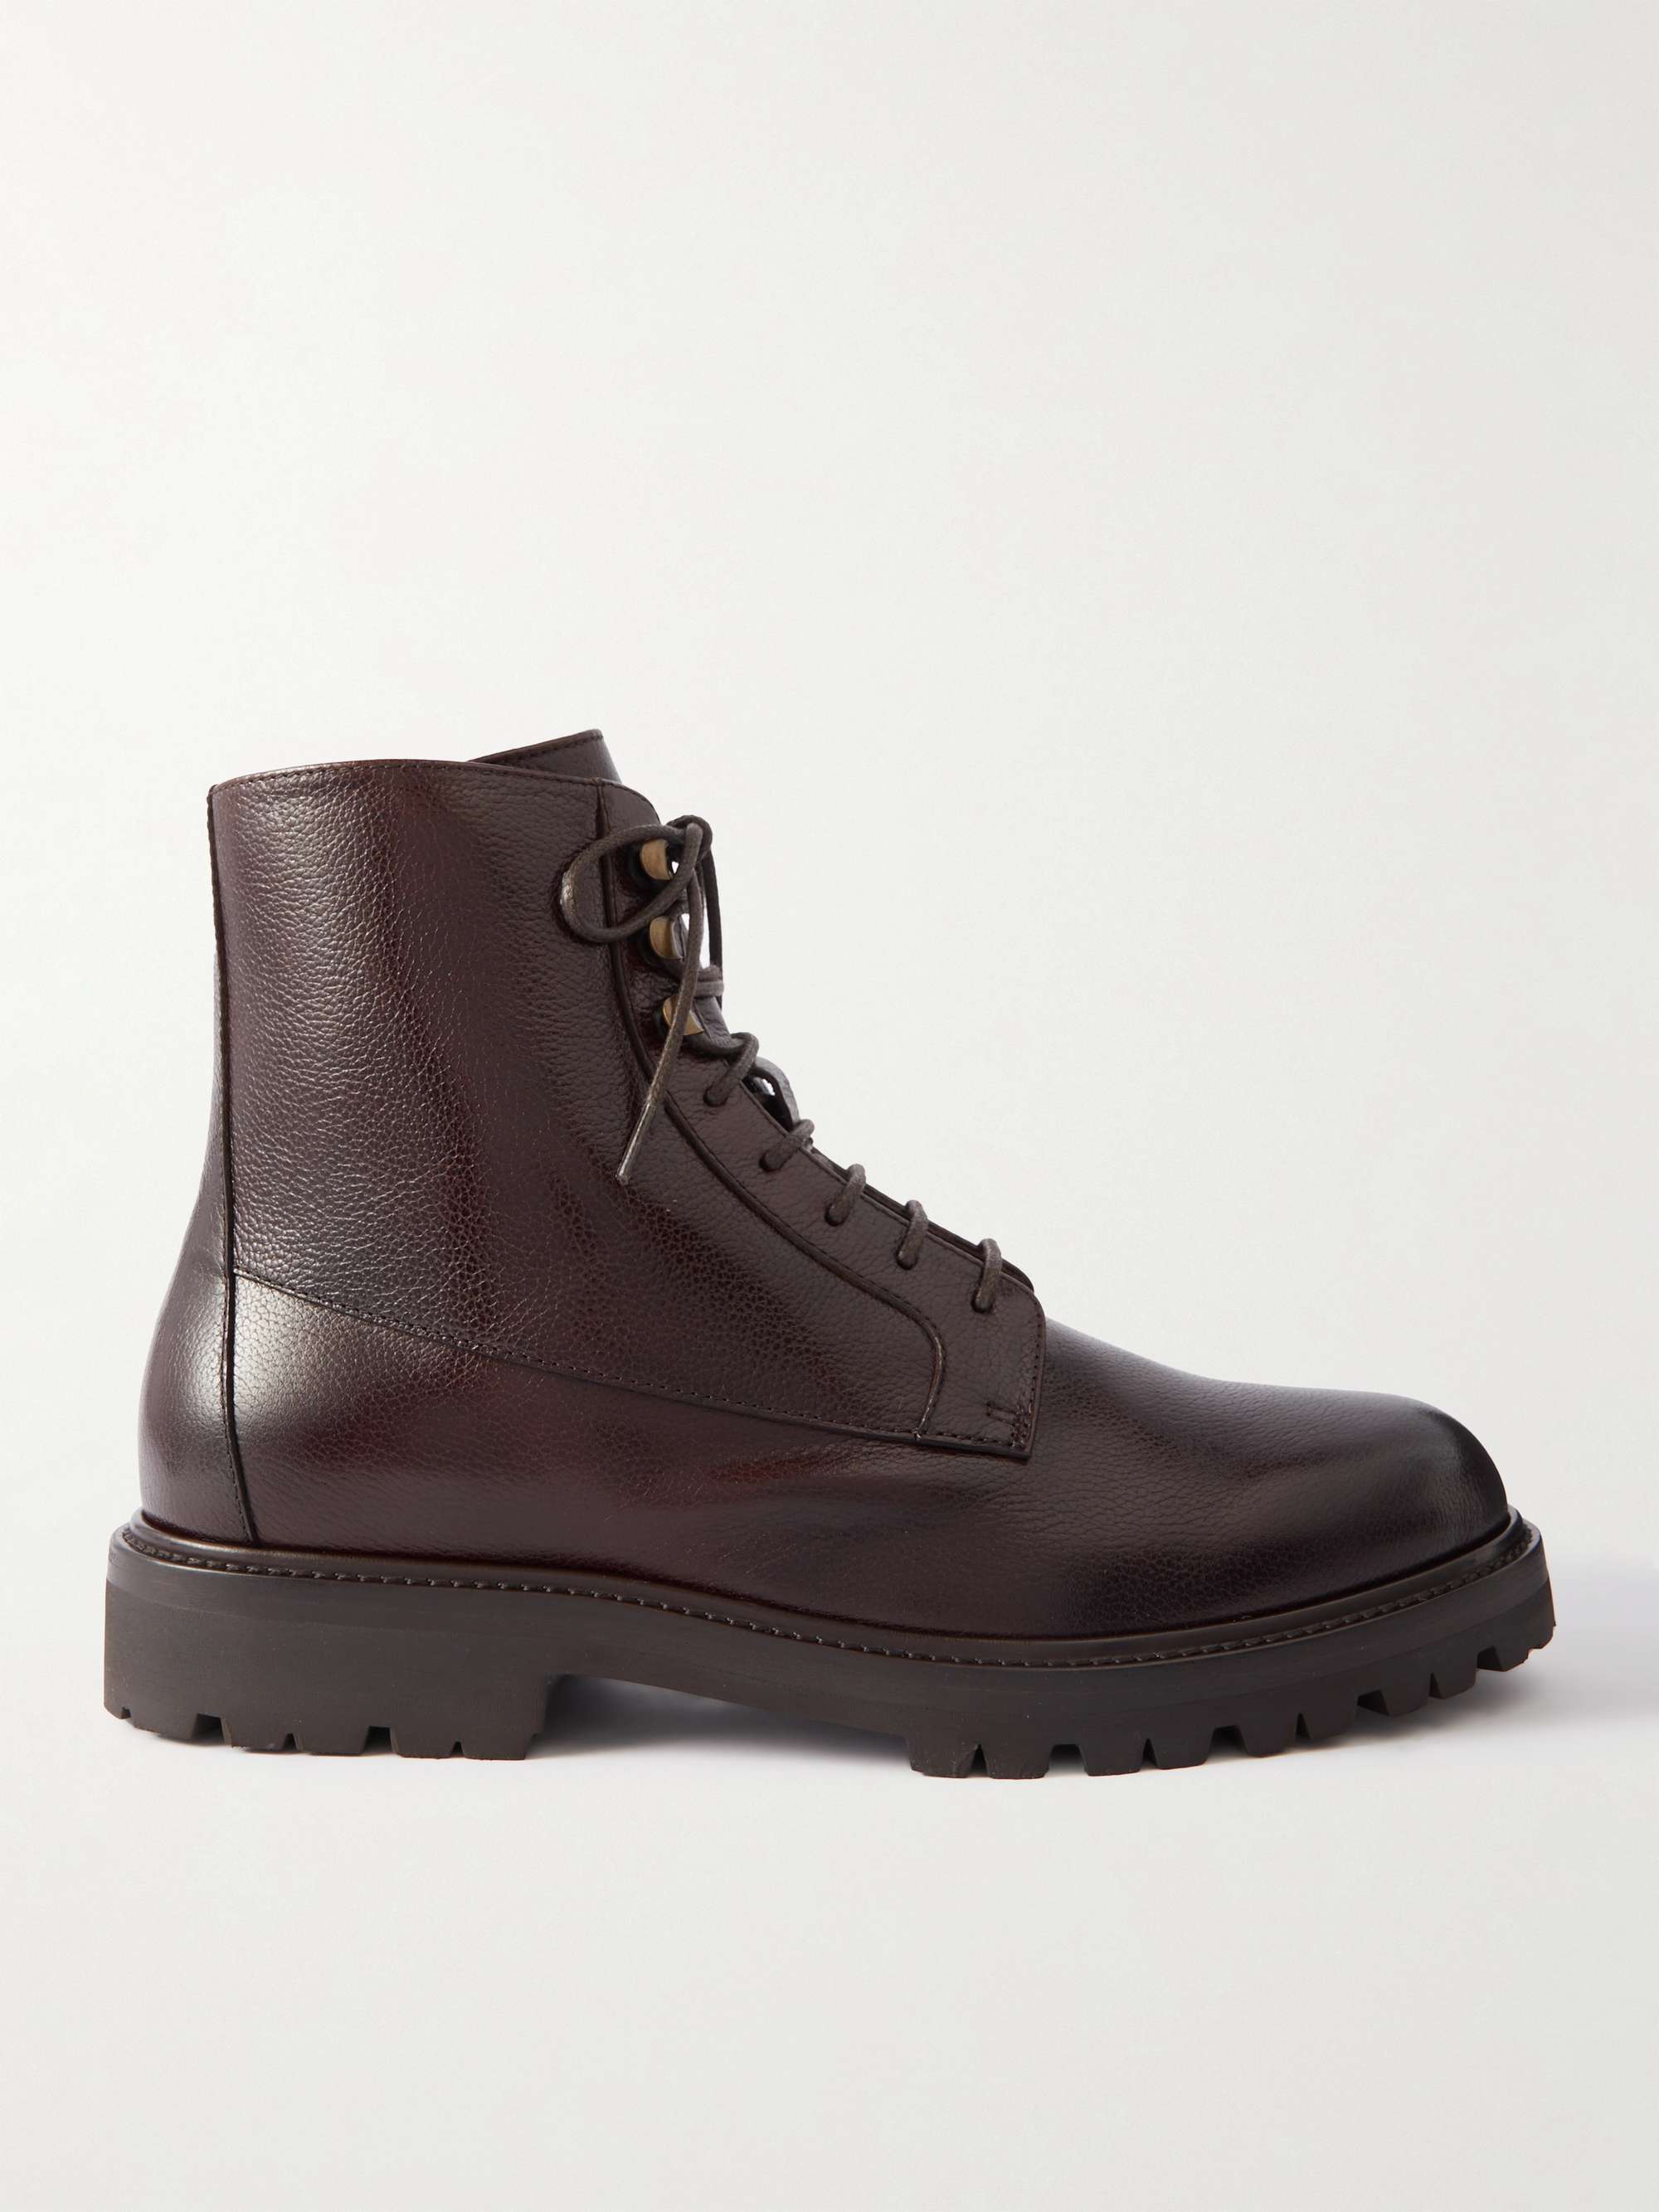 BRUNELLO CUCINELLI Shearling-Lined Full-Grain Leather Hiking Boots for Men  | MR PORTER